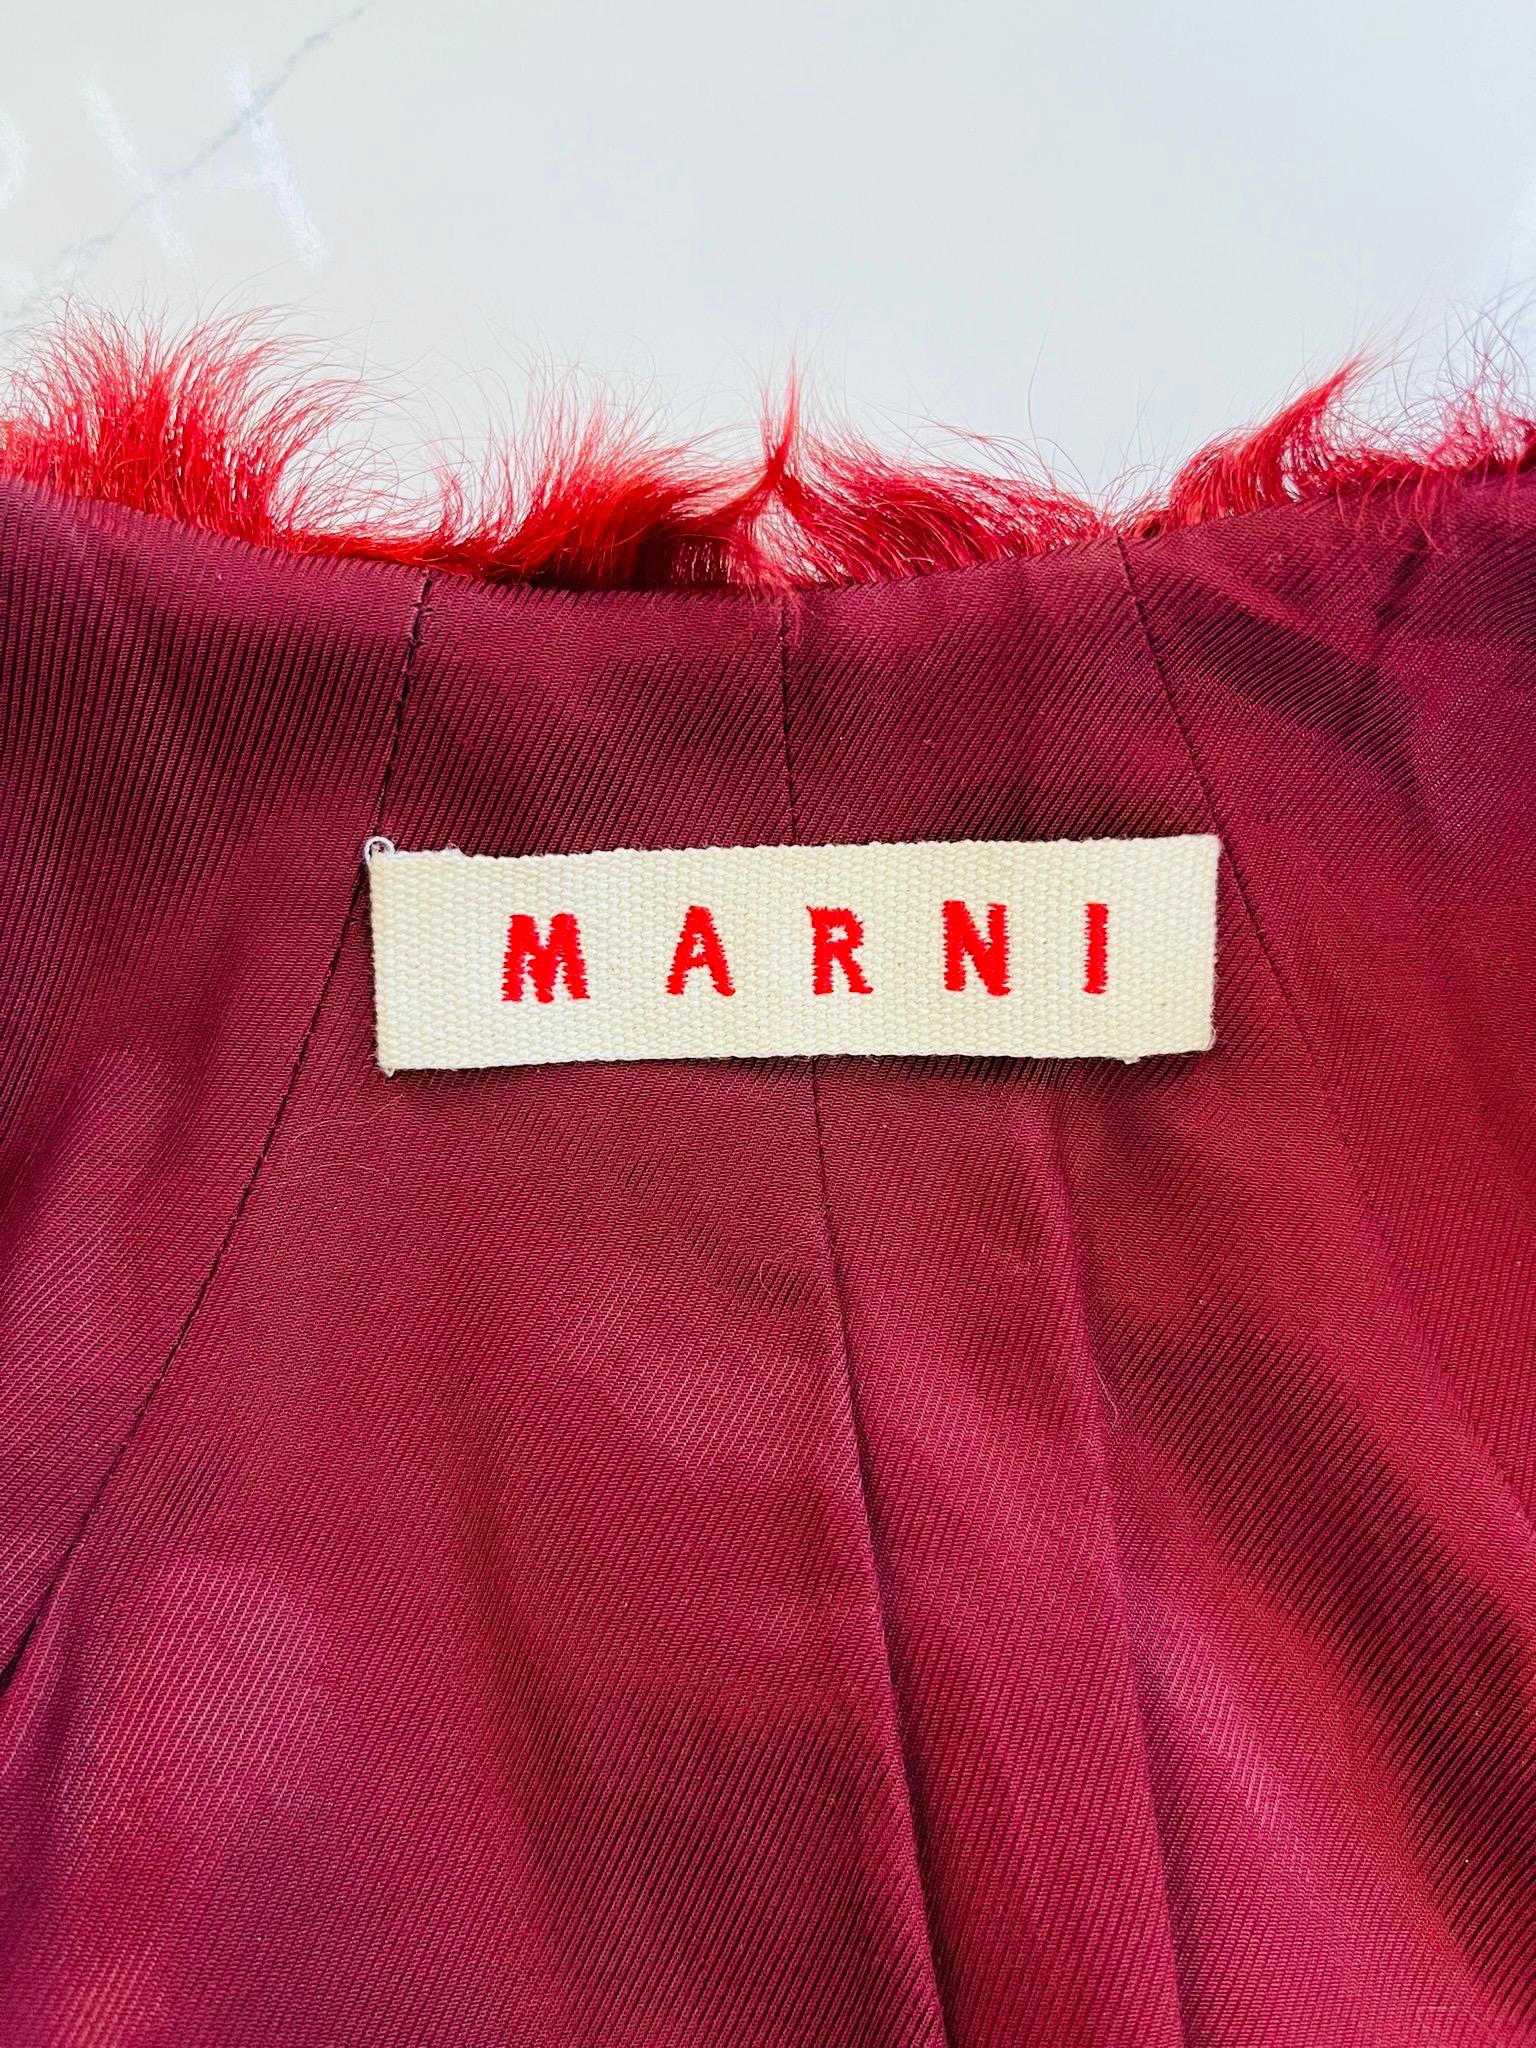 Marni Persian Lambskin Jacket For Sale 1